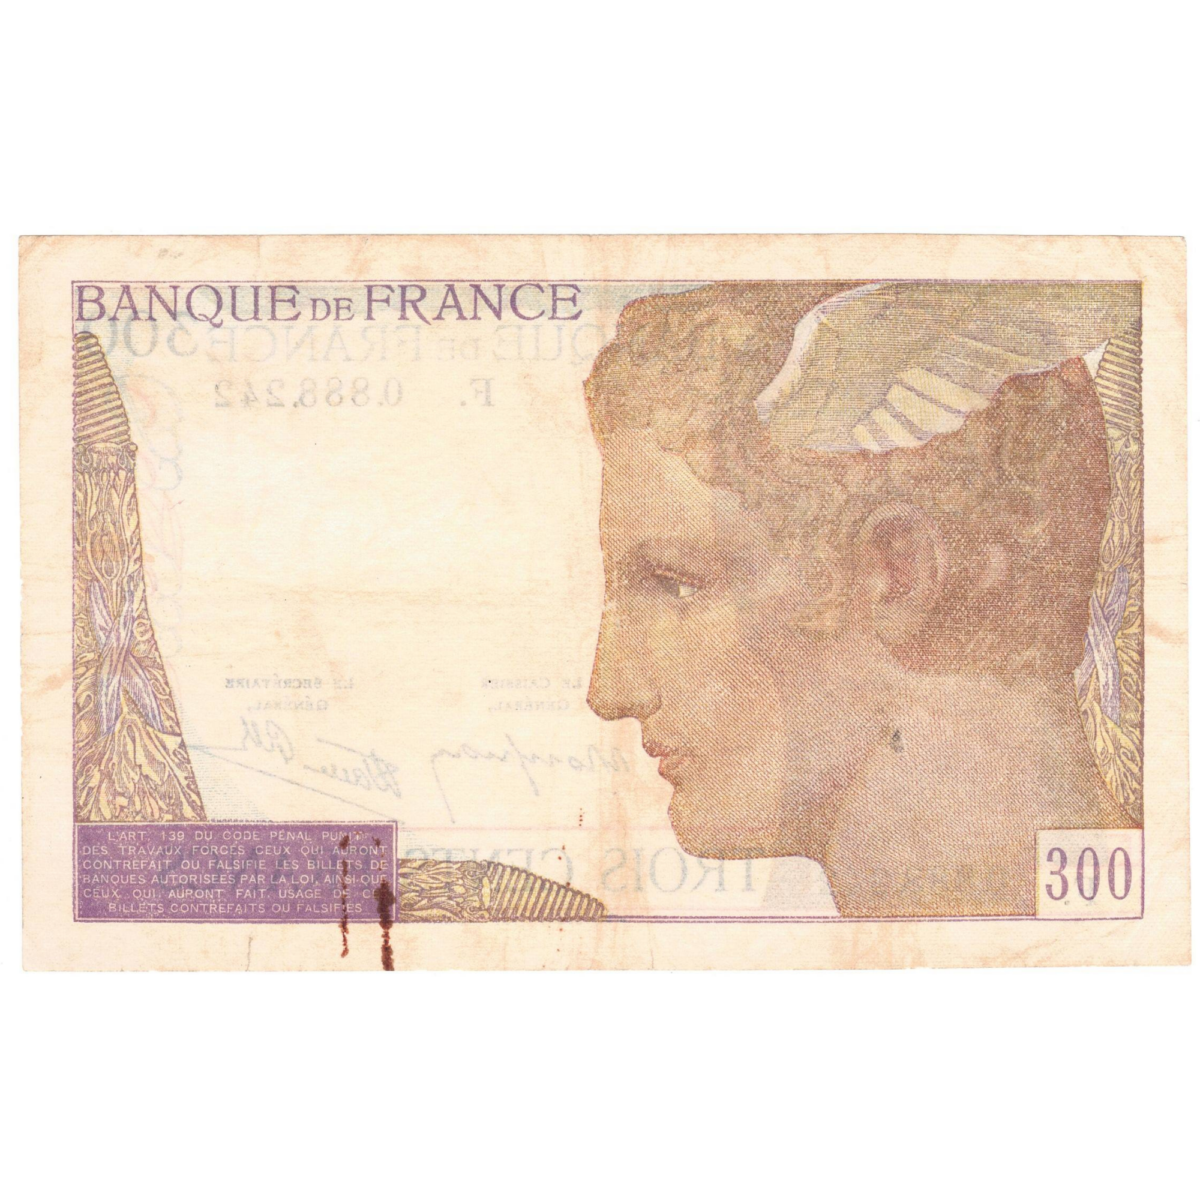 France 300 francs type serveau 1938 revers 0020